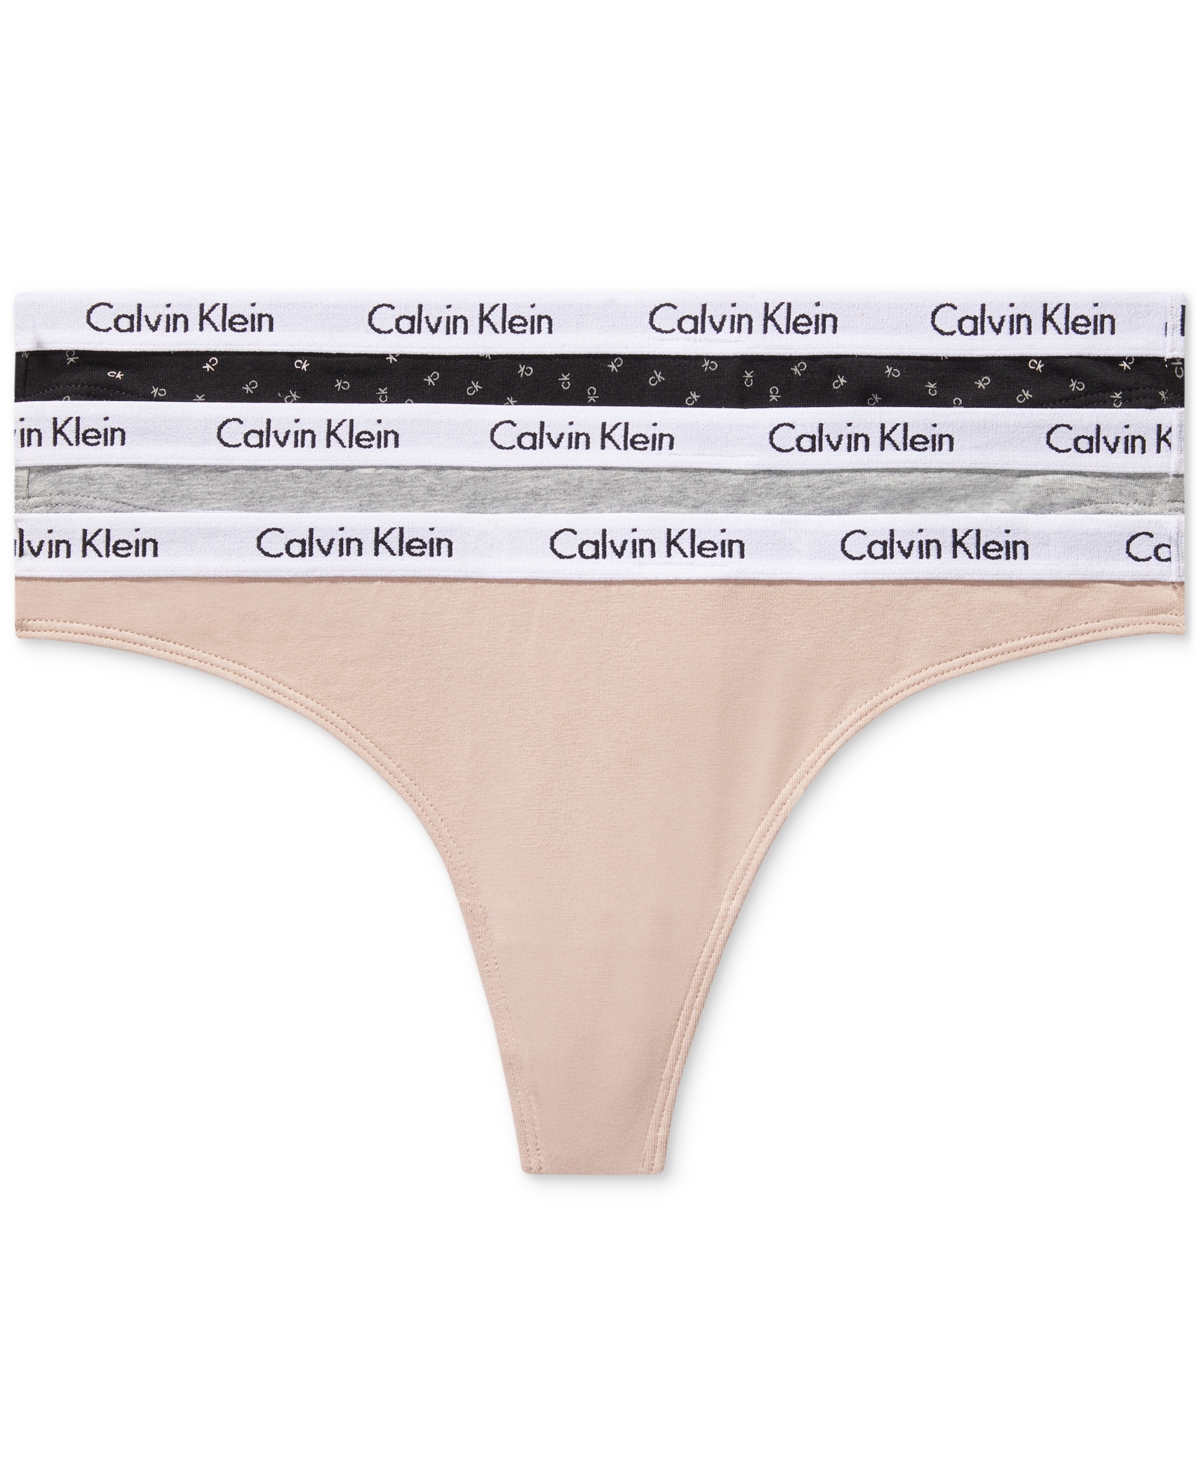 Calvin Klein Carousel Cotton 3-pack Thong Underwear Qd3587 In Tan,grey,black Ck Print